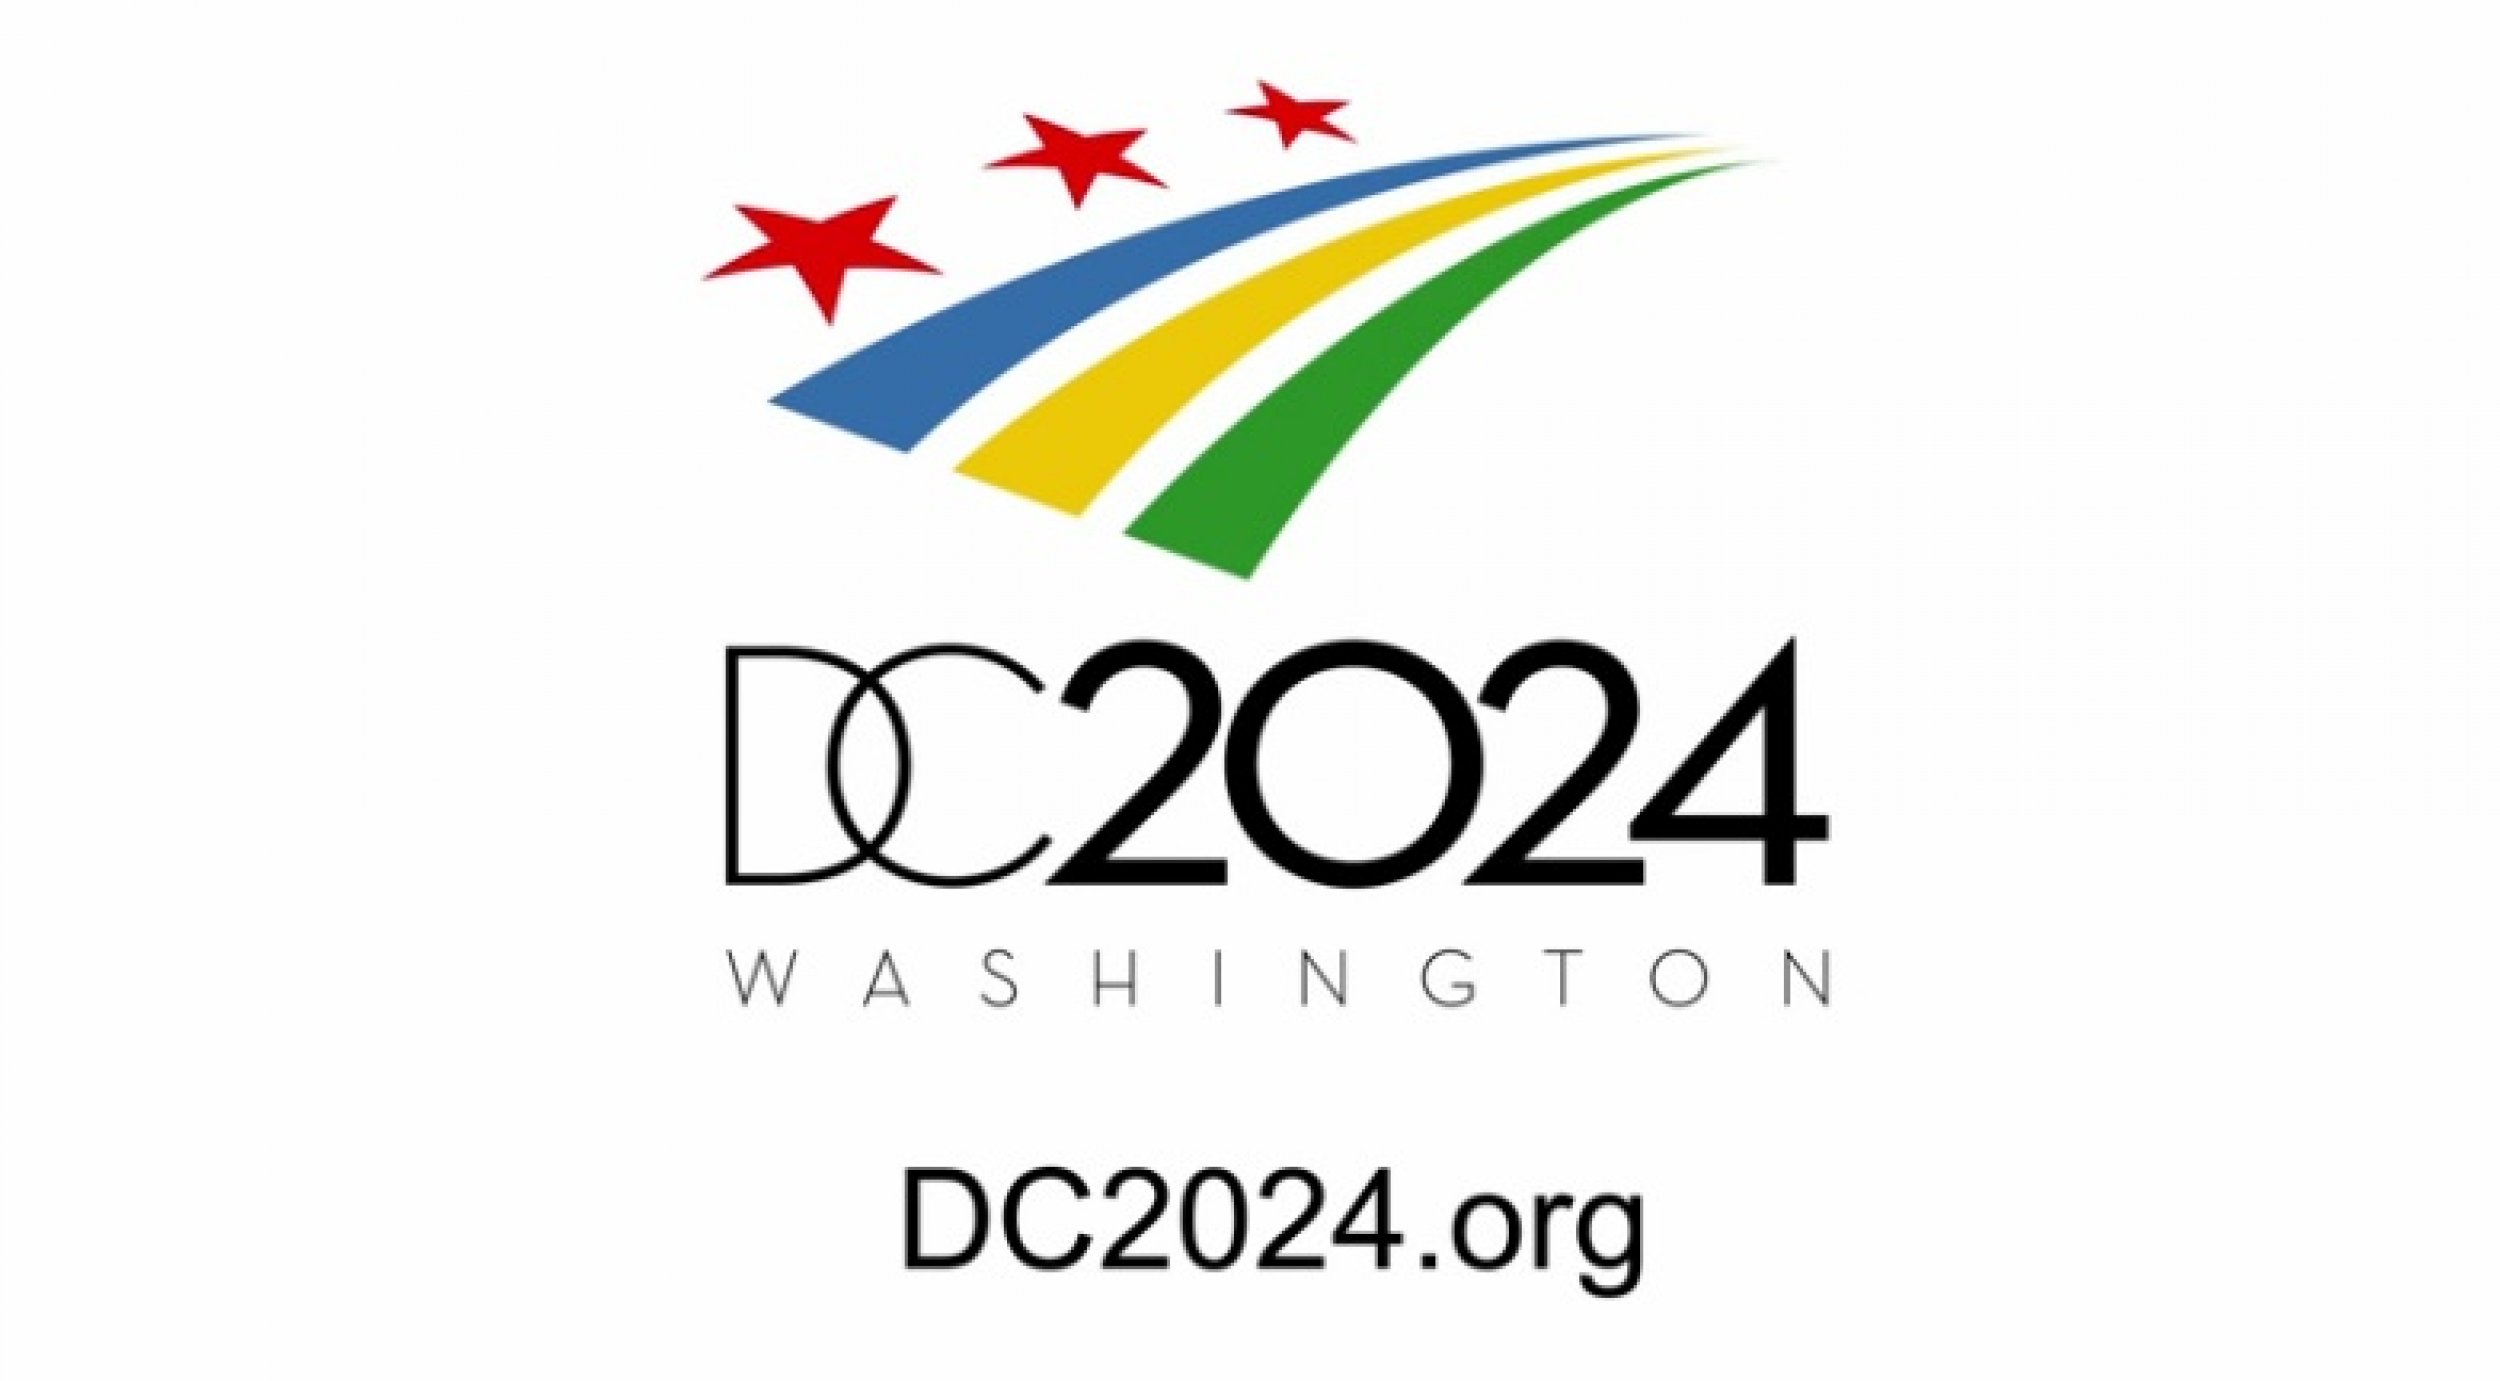 Washington DC Eyes 2024 Olympics With New Campaign IBTimes